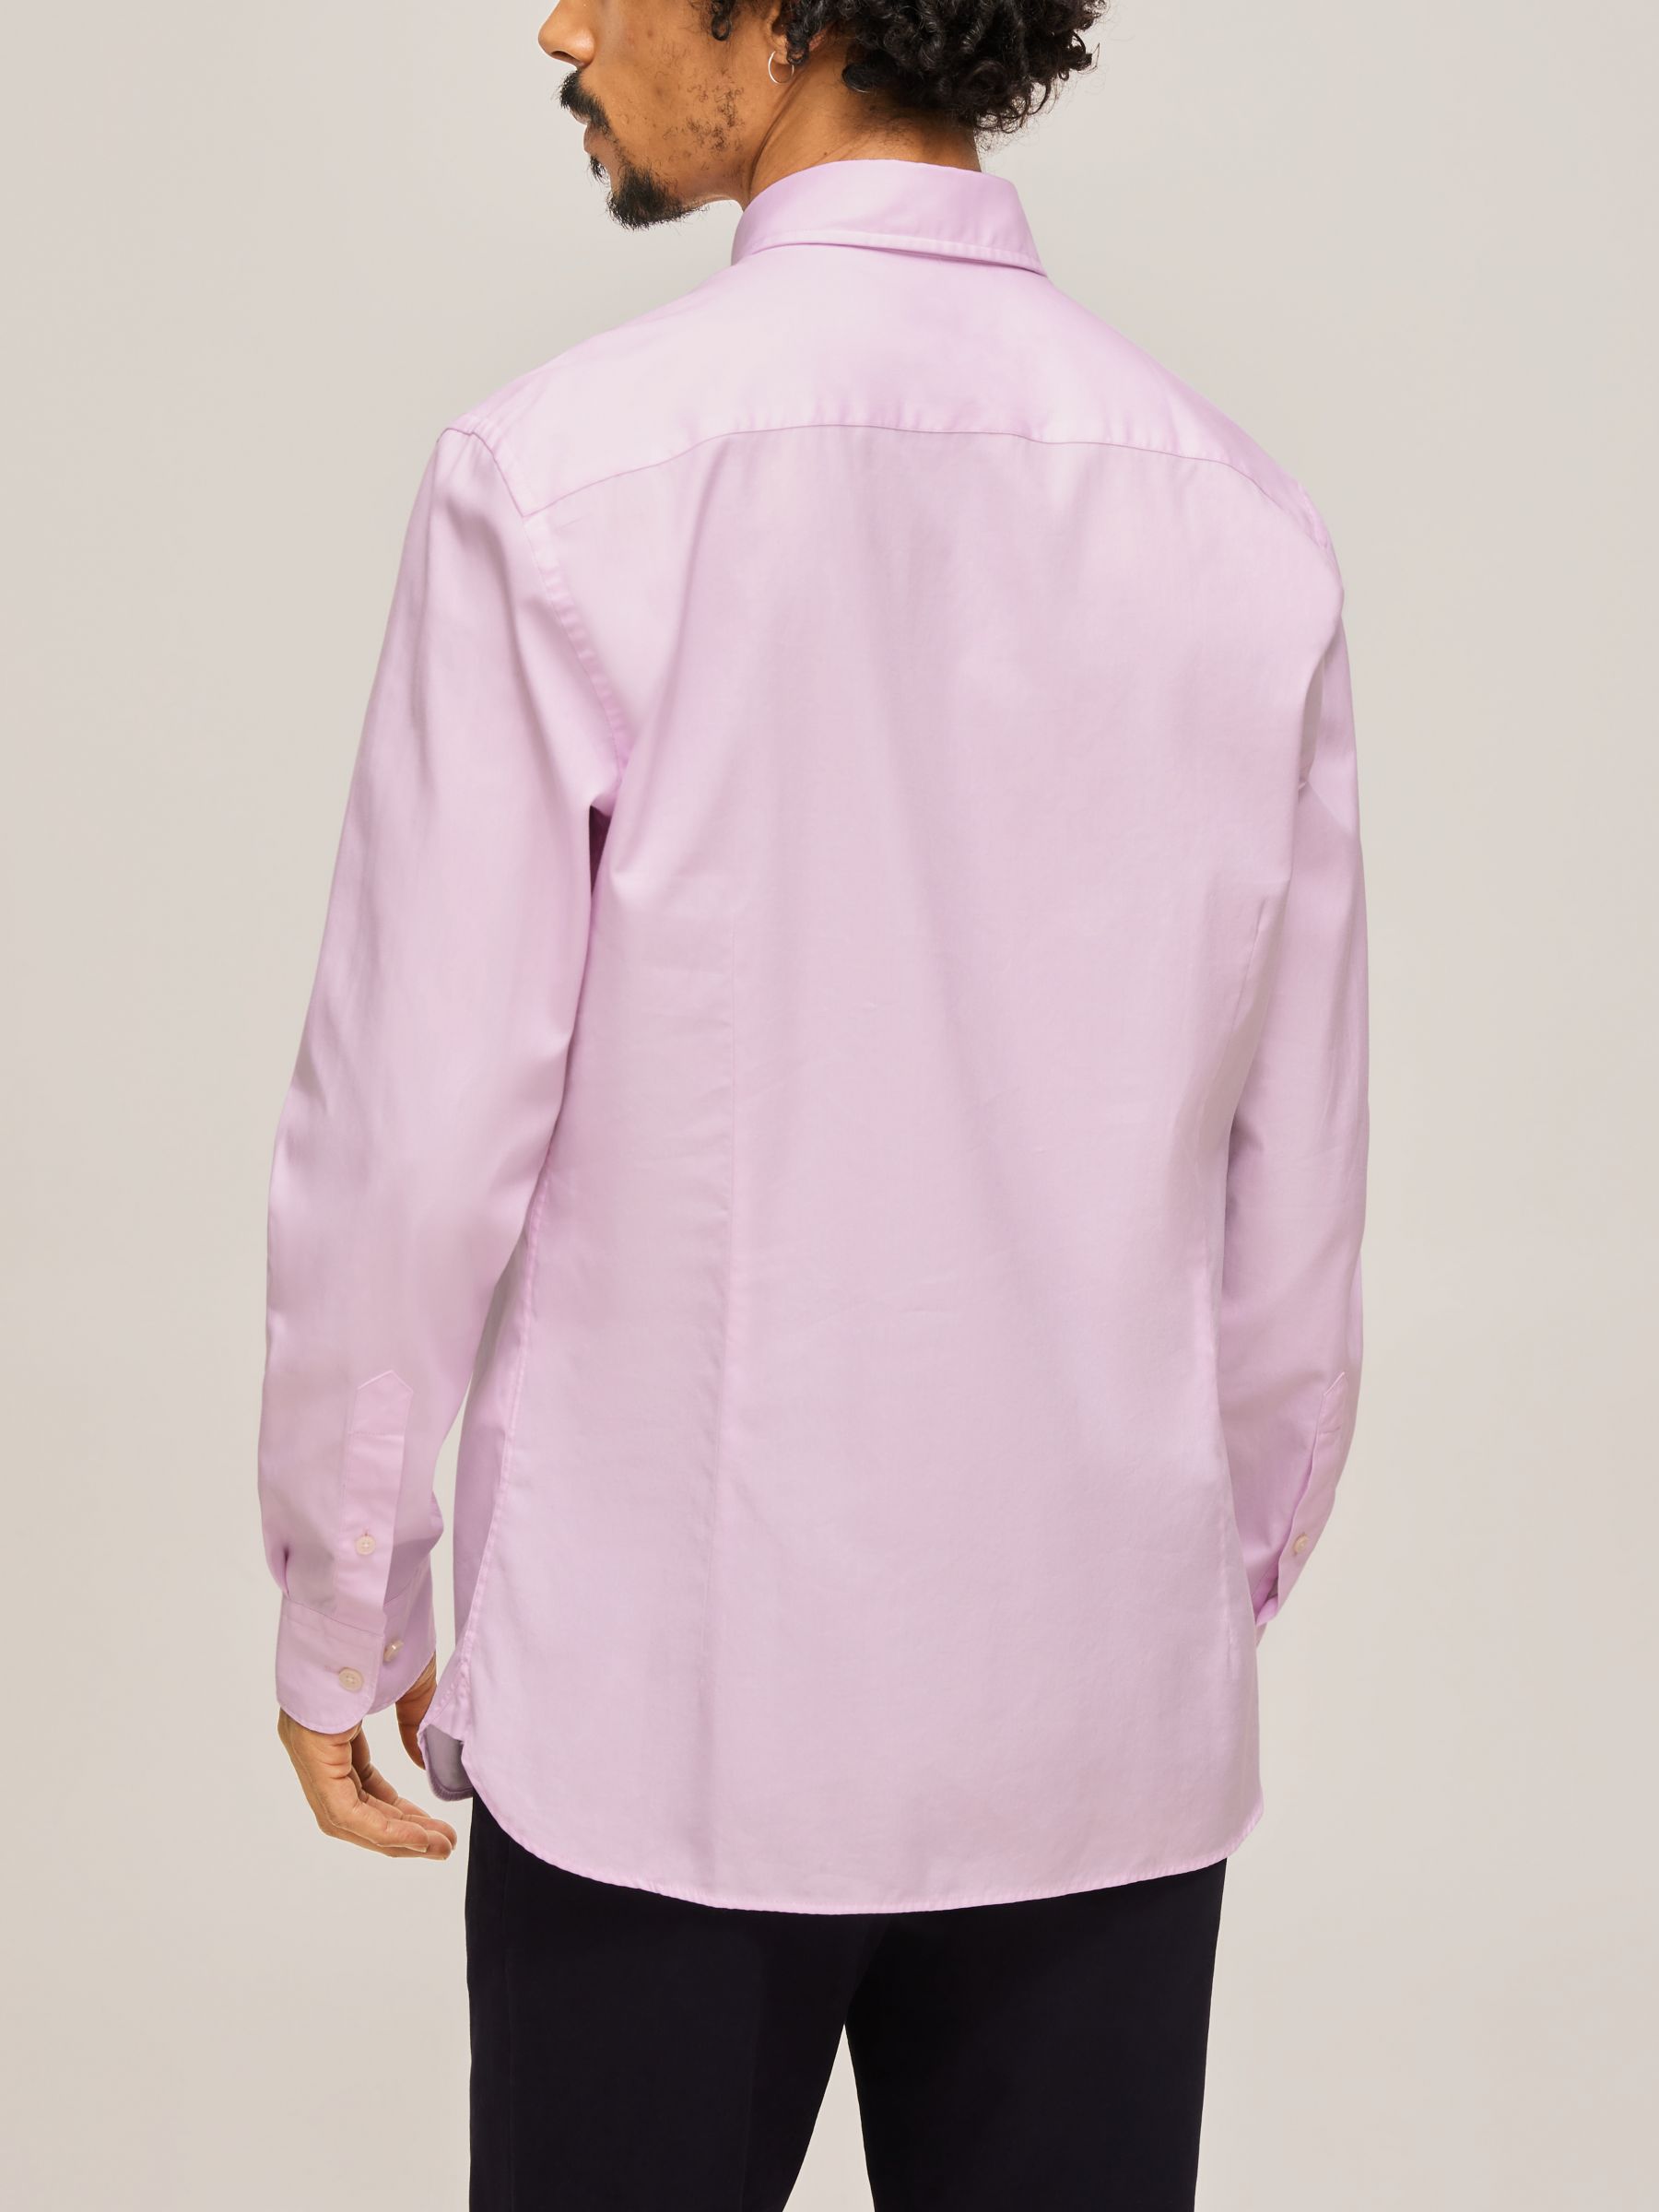 Hackett London Cotton Oxford Shirt, Light Pink at John Lewis & Partners